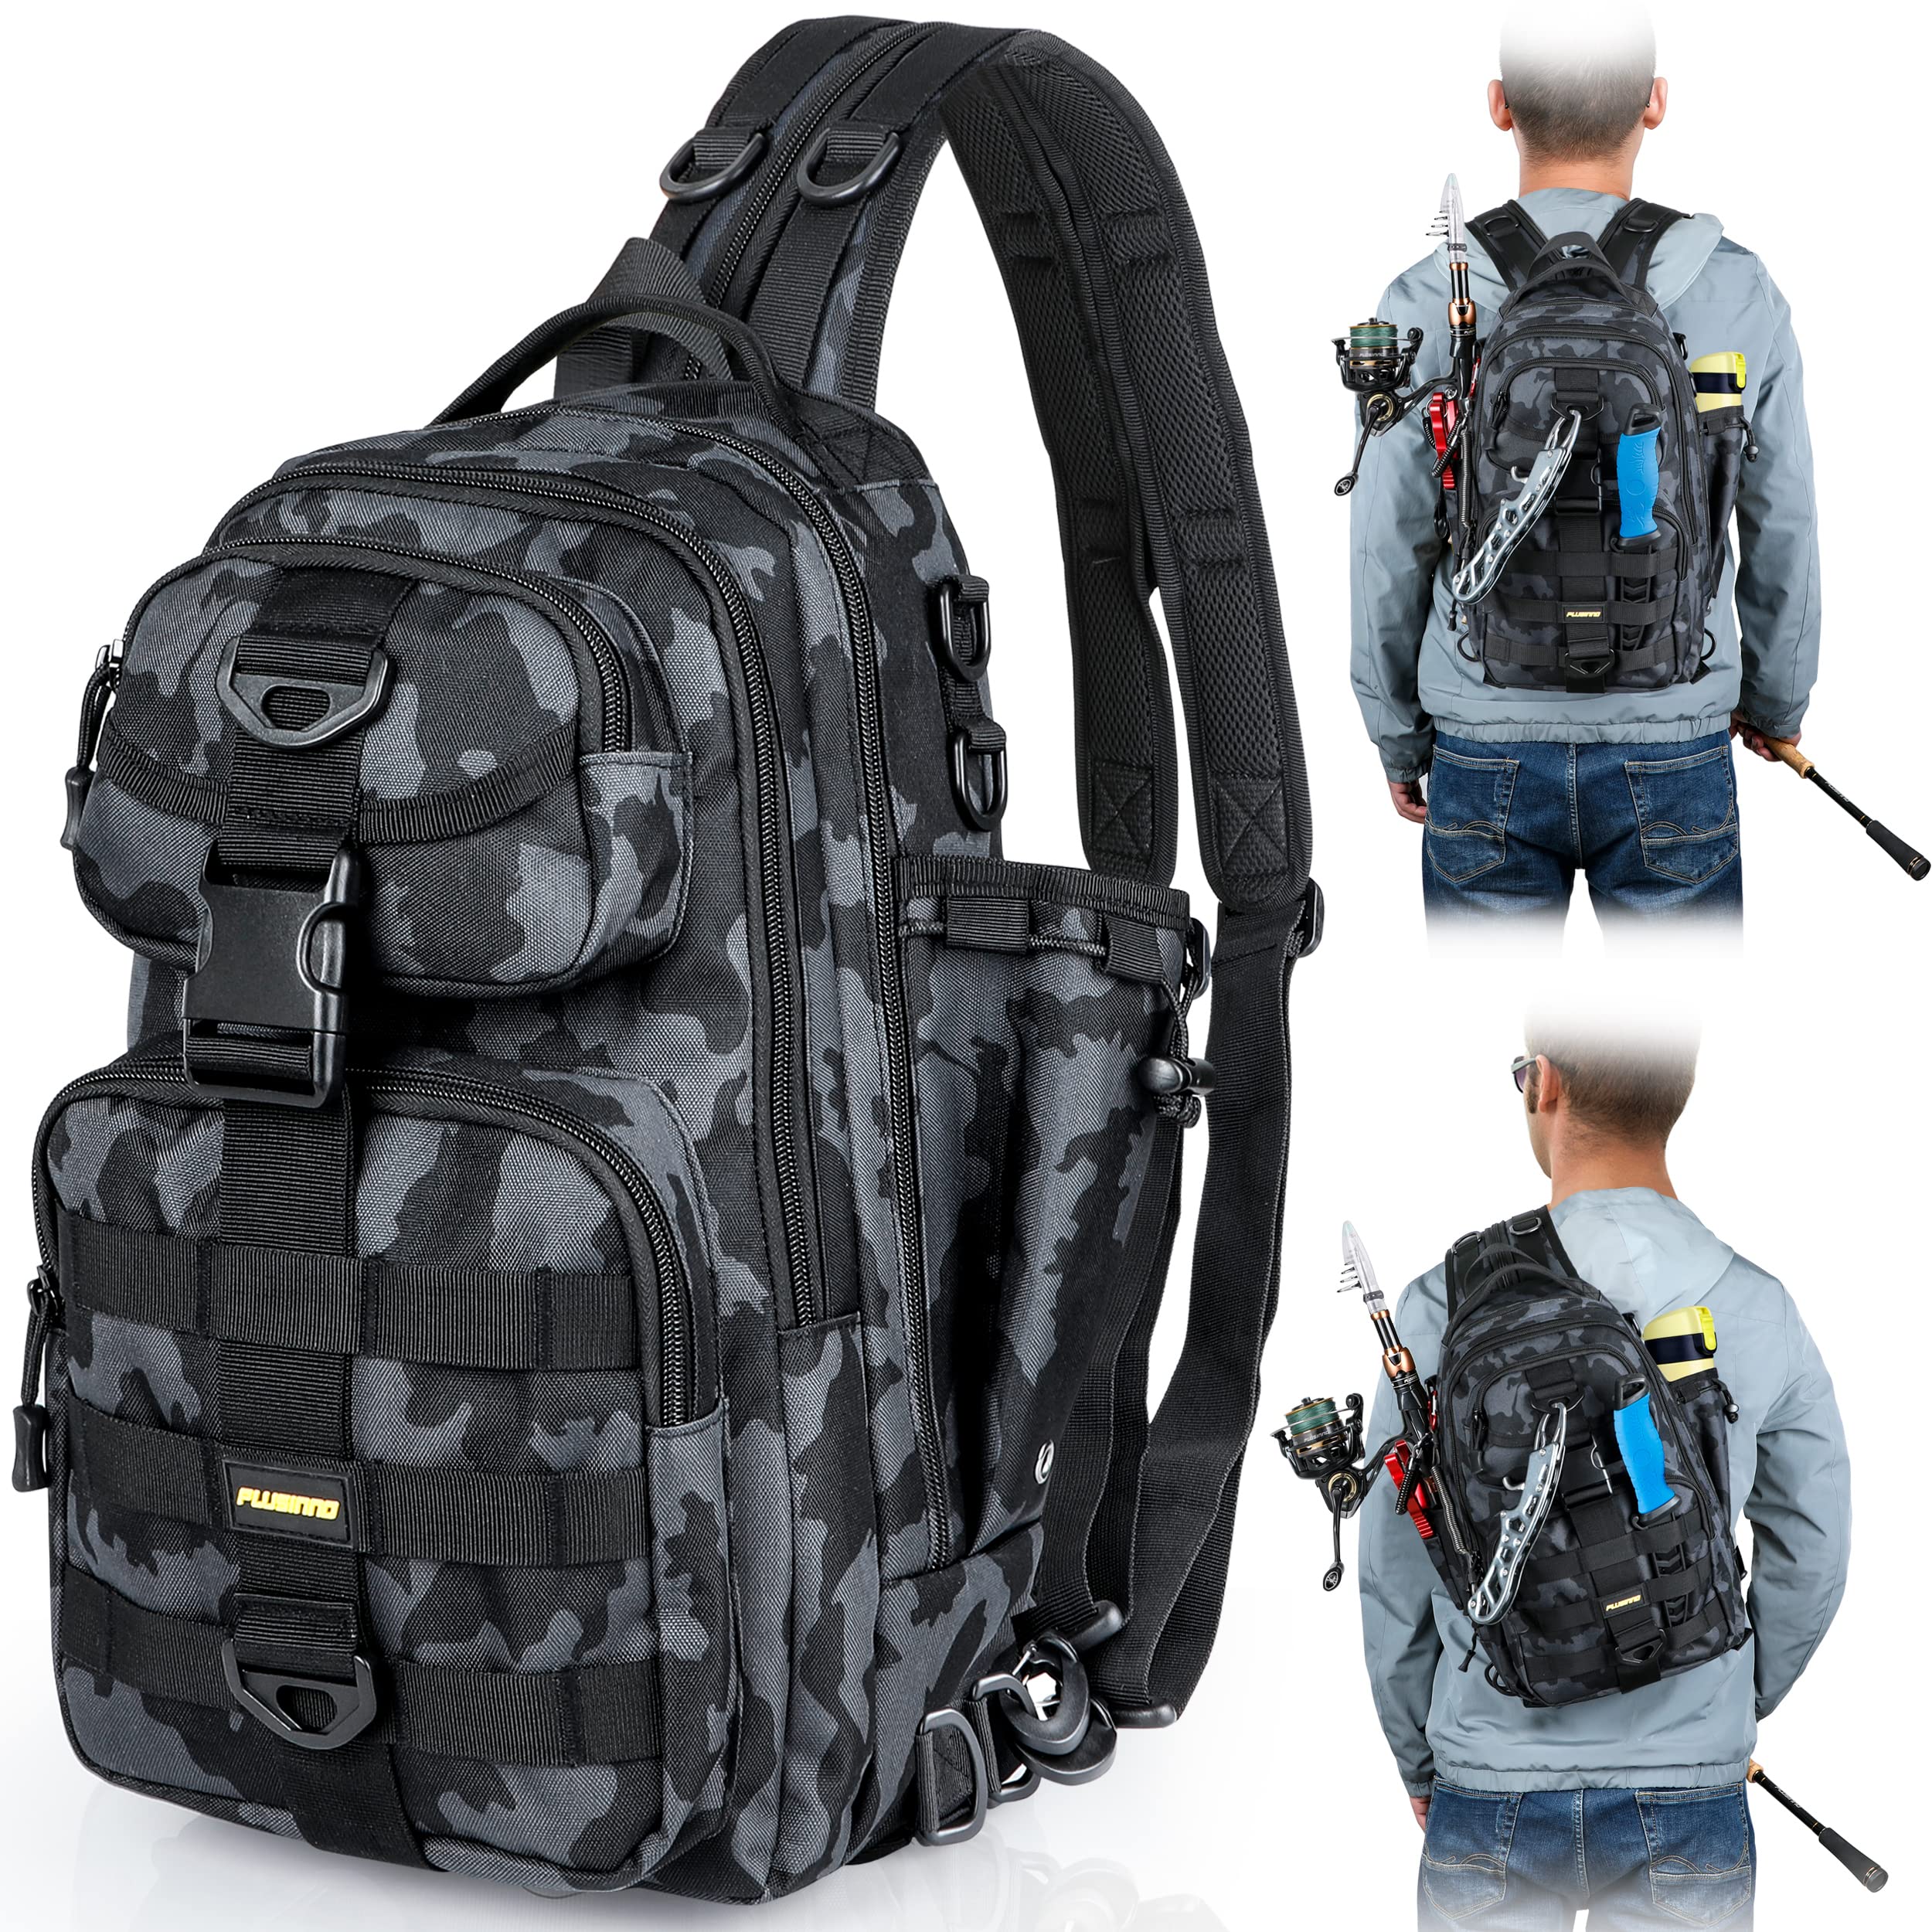 PLUSINNO Fishing Backpack Tackle Bag Water-Resistant Fishing